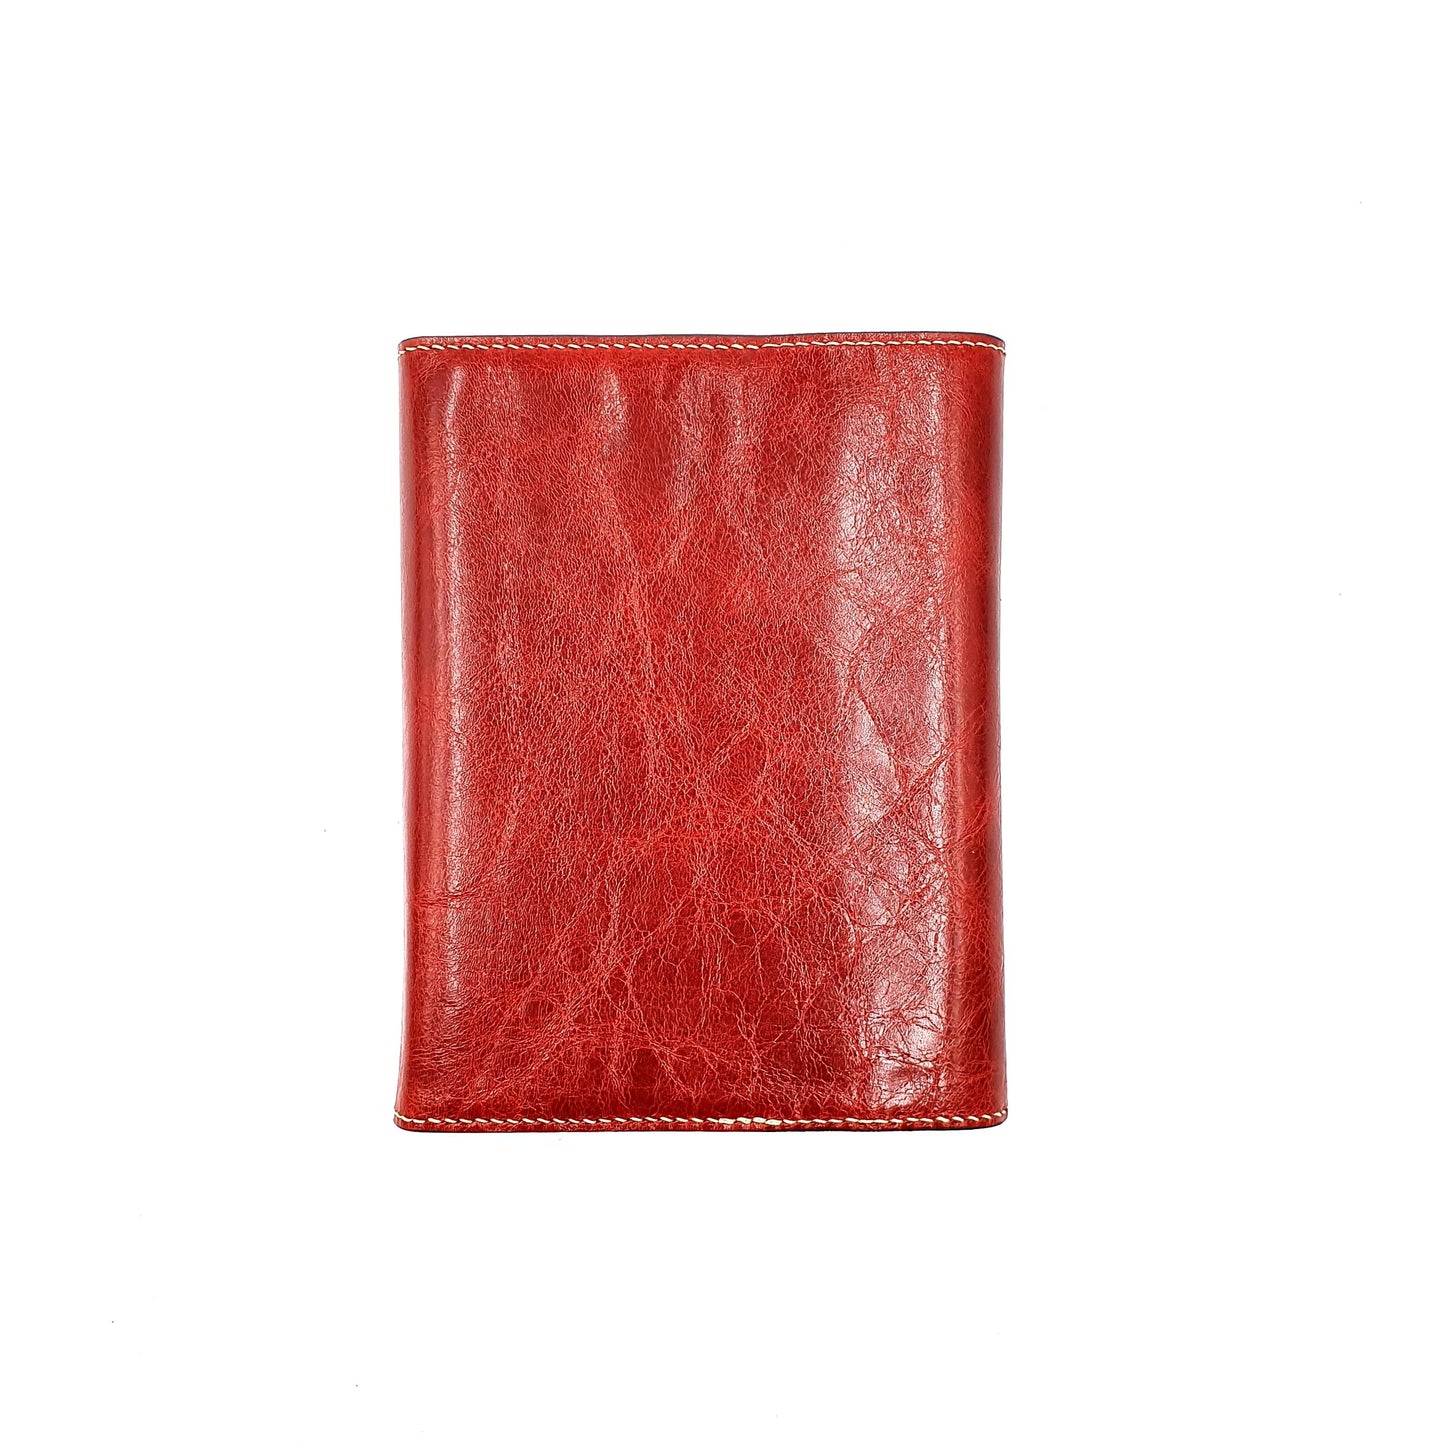 ARKADEMIE Bespoke Leather Notebook Sleeve